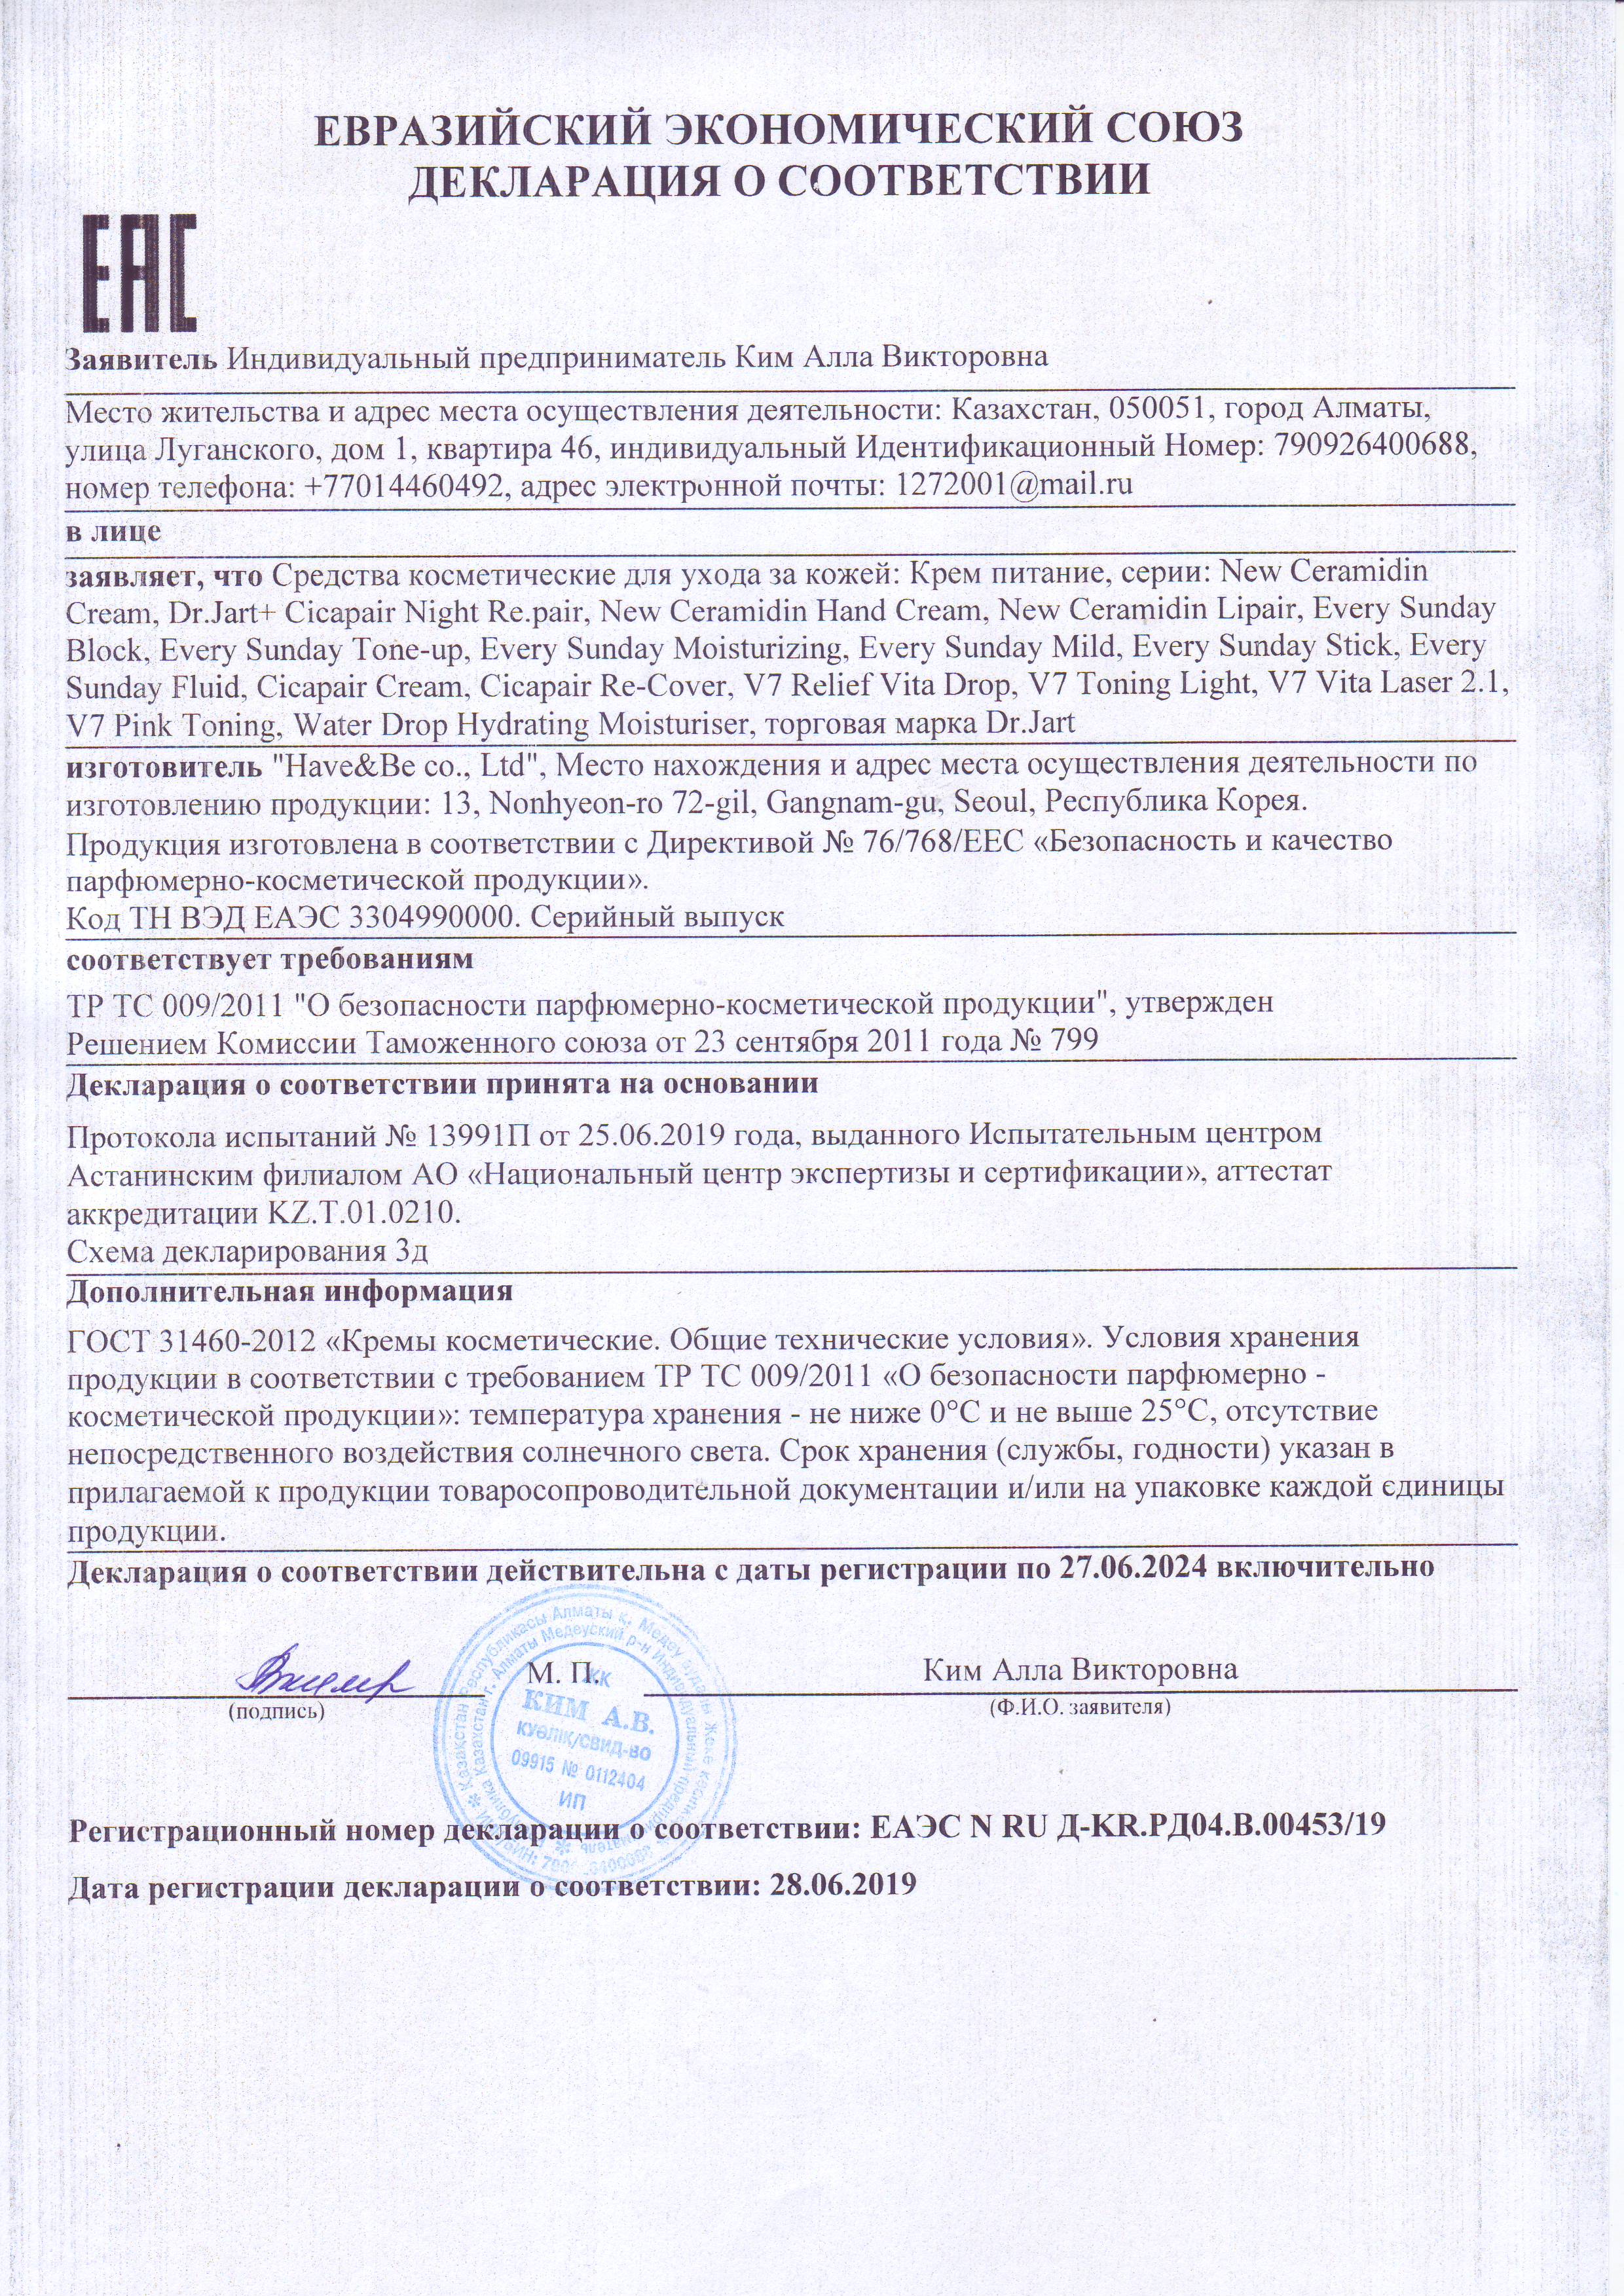 сертификат др джарт 5